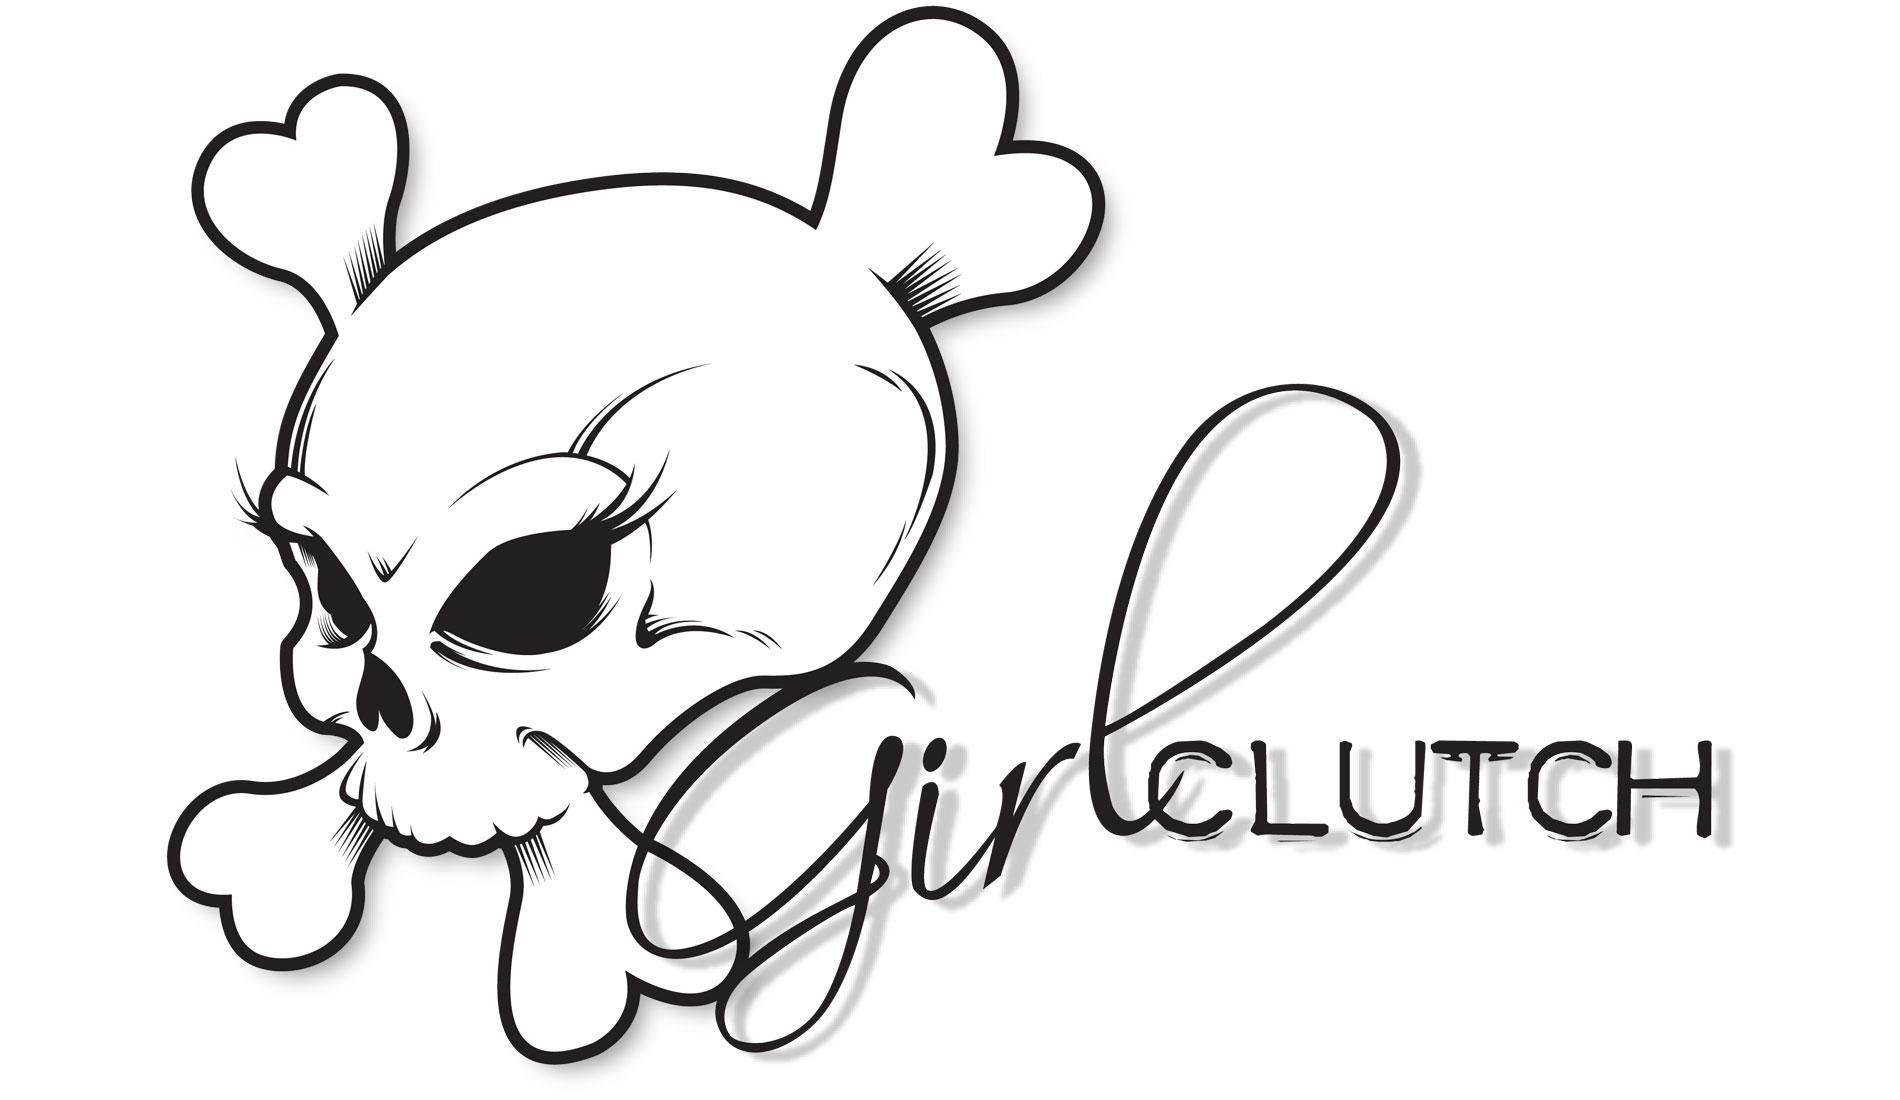 Girl Clutch